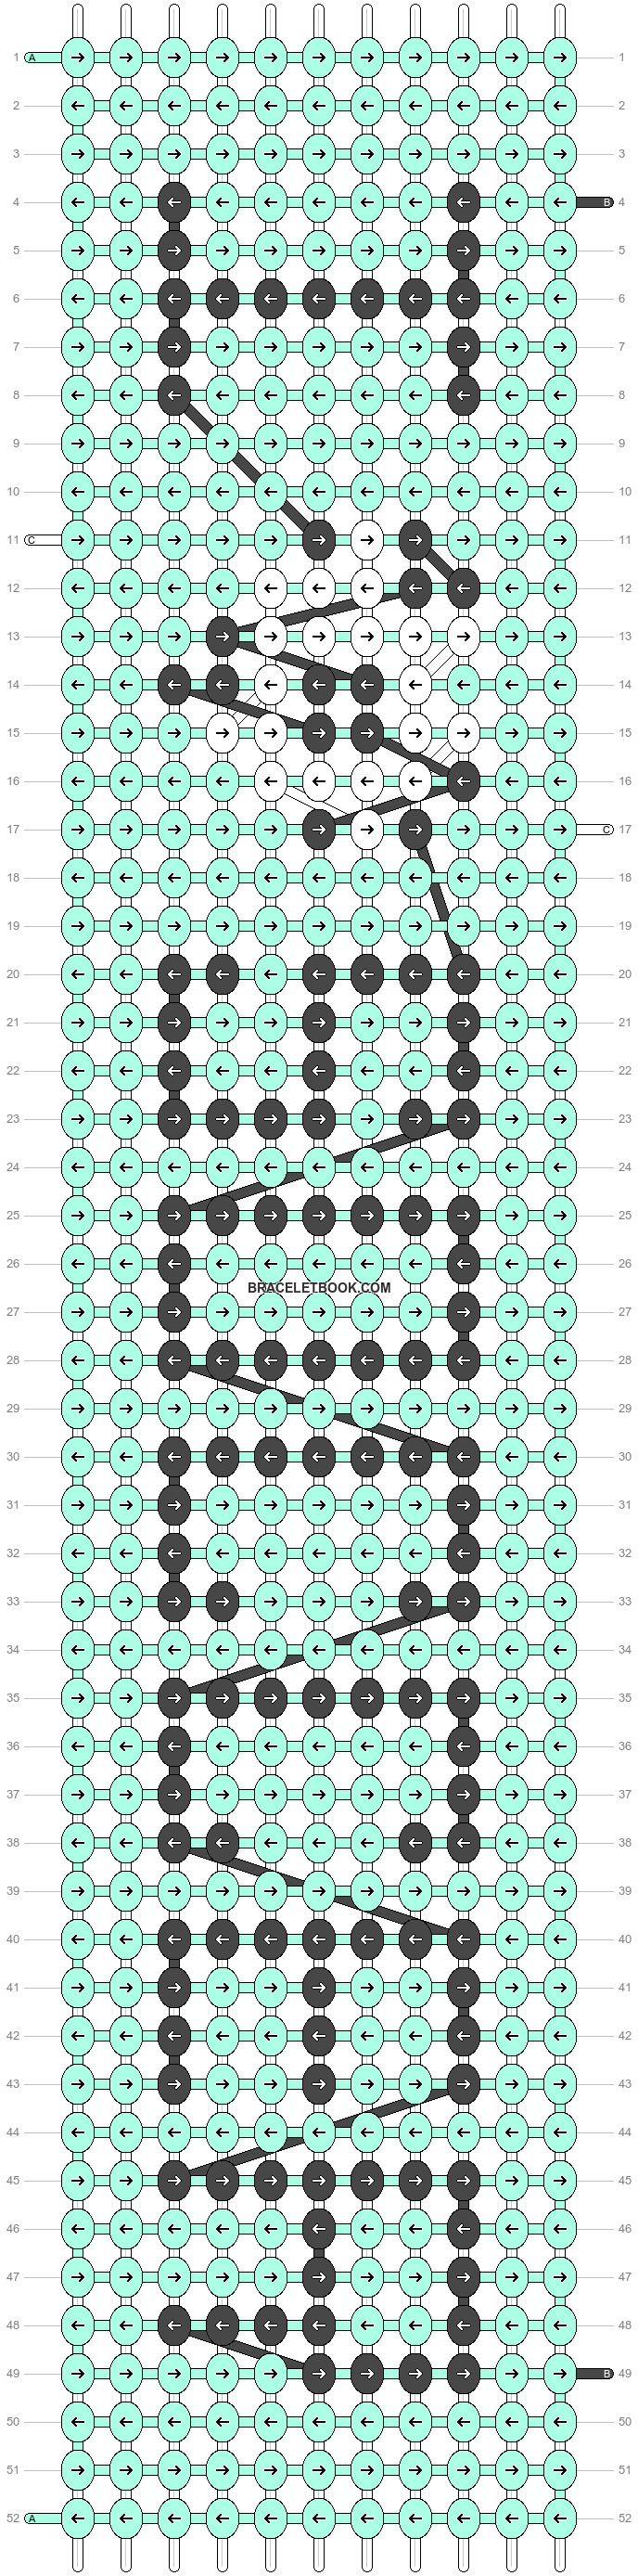 Alpha pattern #78058 pattern